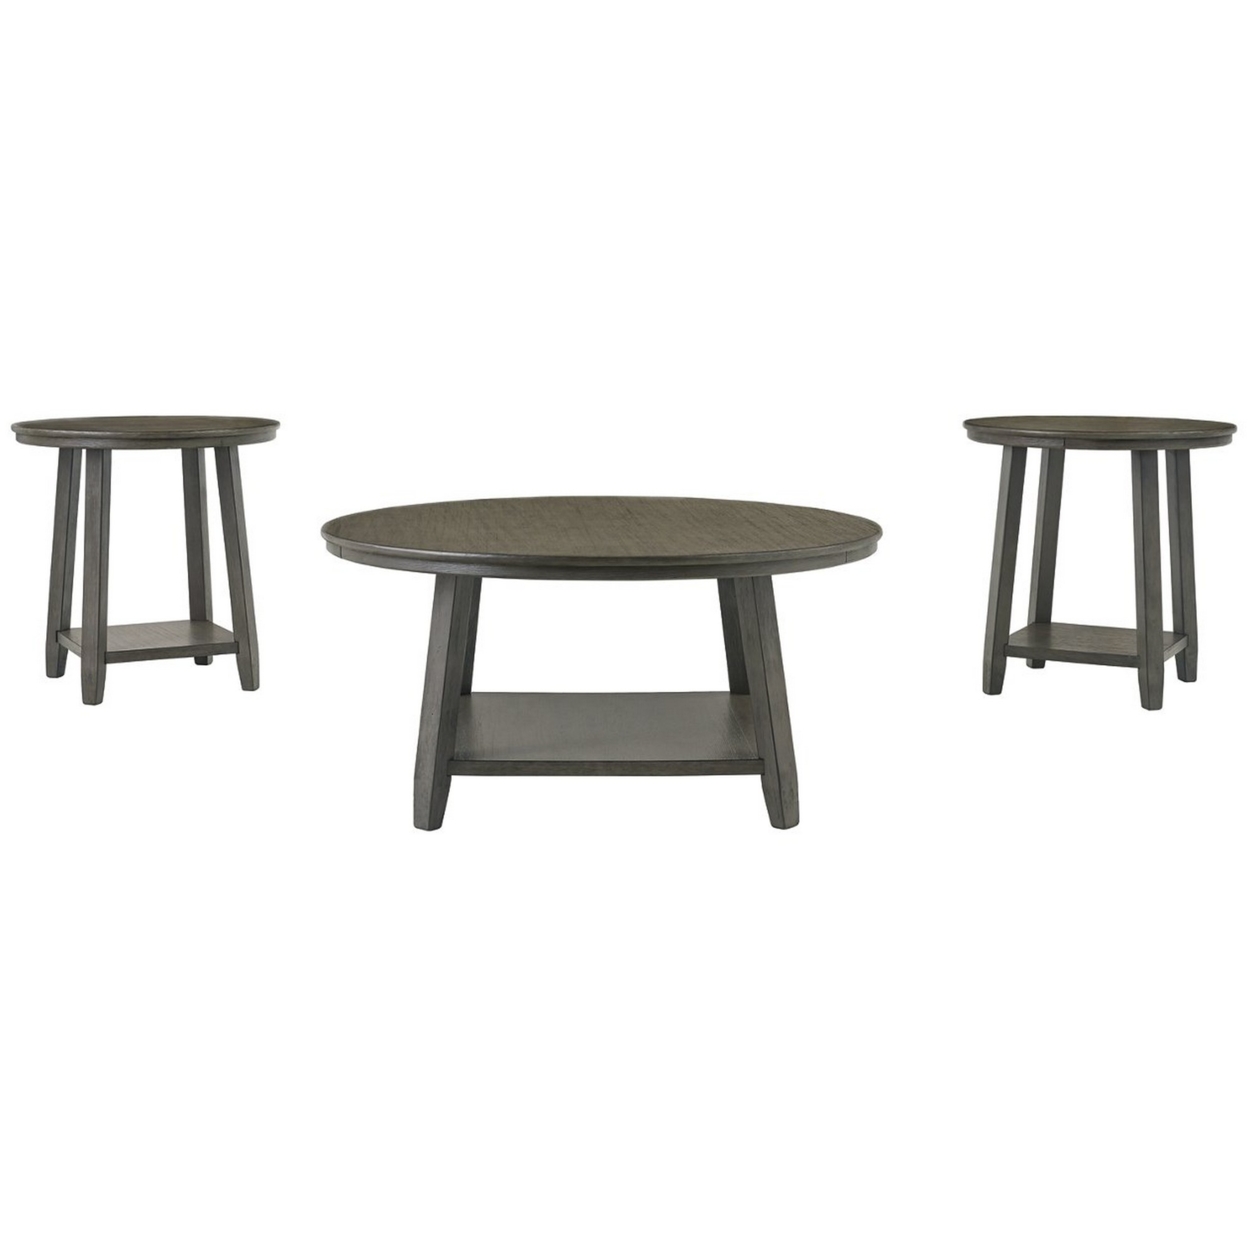 3 Piece Occasional Table Set With Open Bottom Shelf, Antique Gray- Saltoro Sherpi